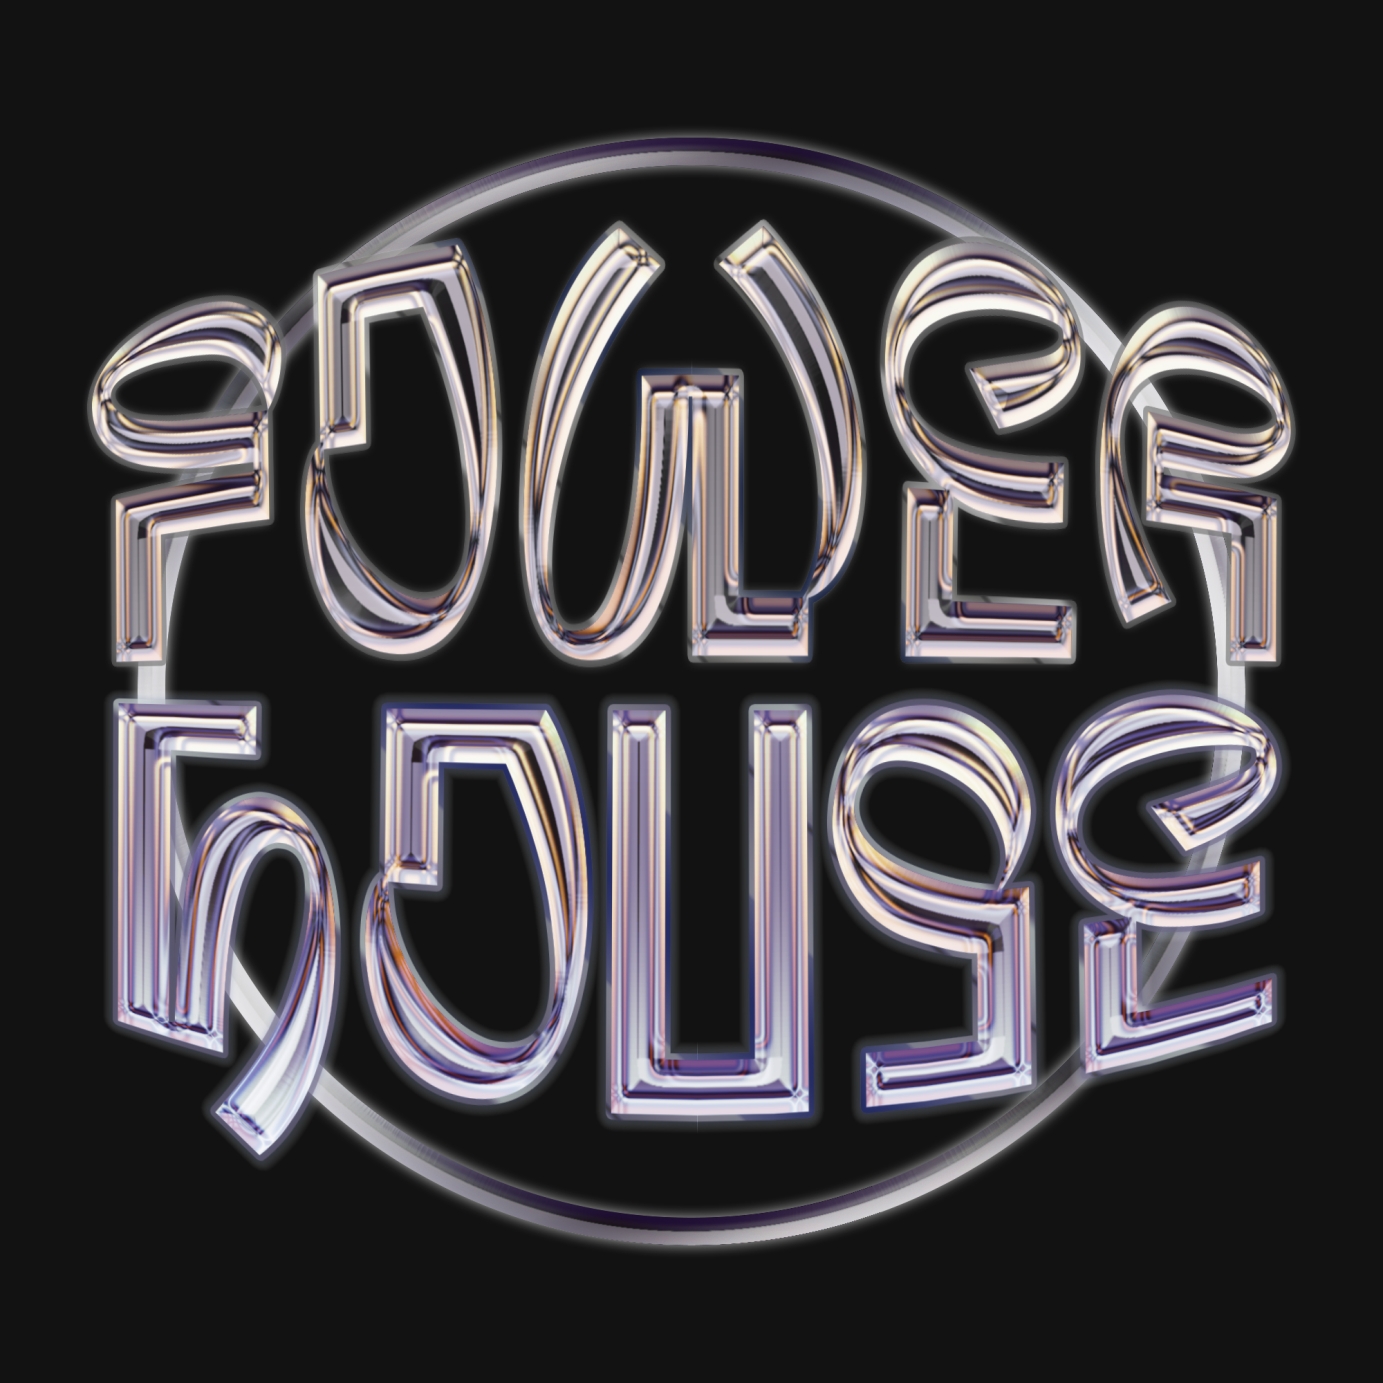 Power House Logo